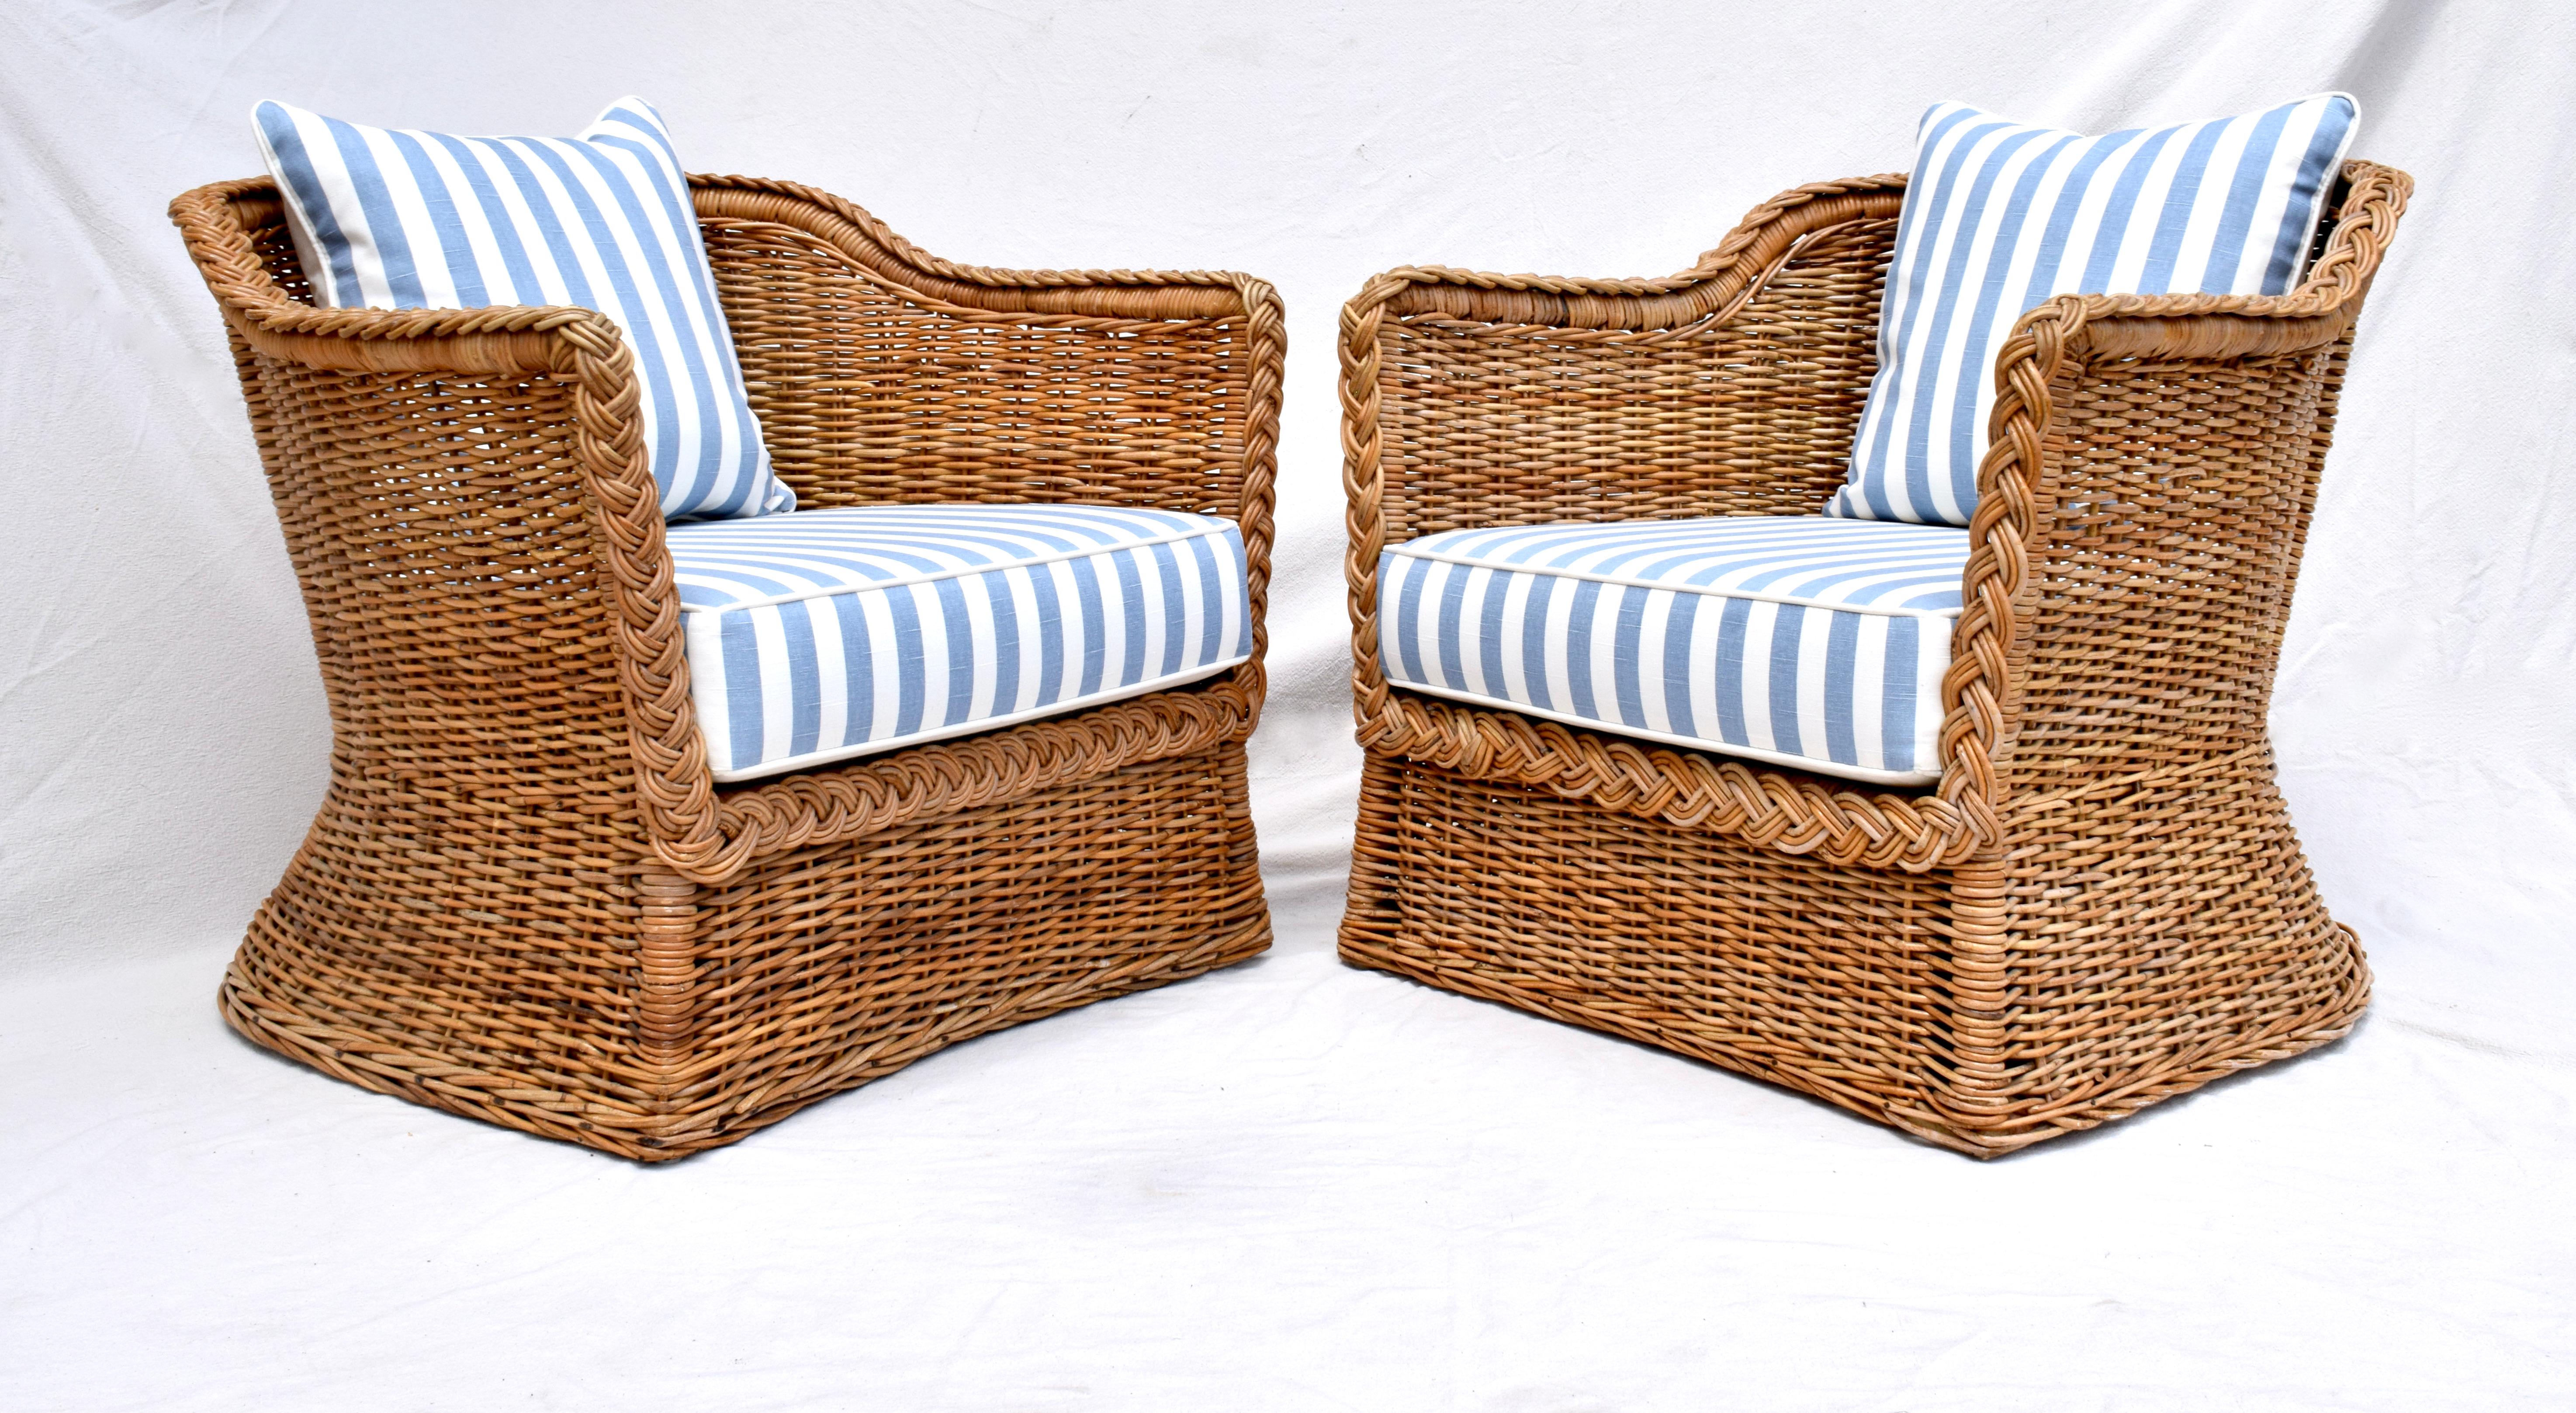 Wicker Works Braided Wicker Rattan Arm Chairs in Blue & White Linen 2